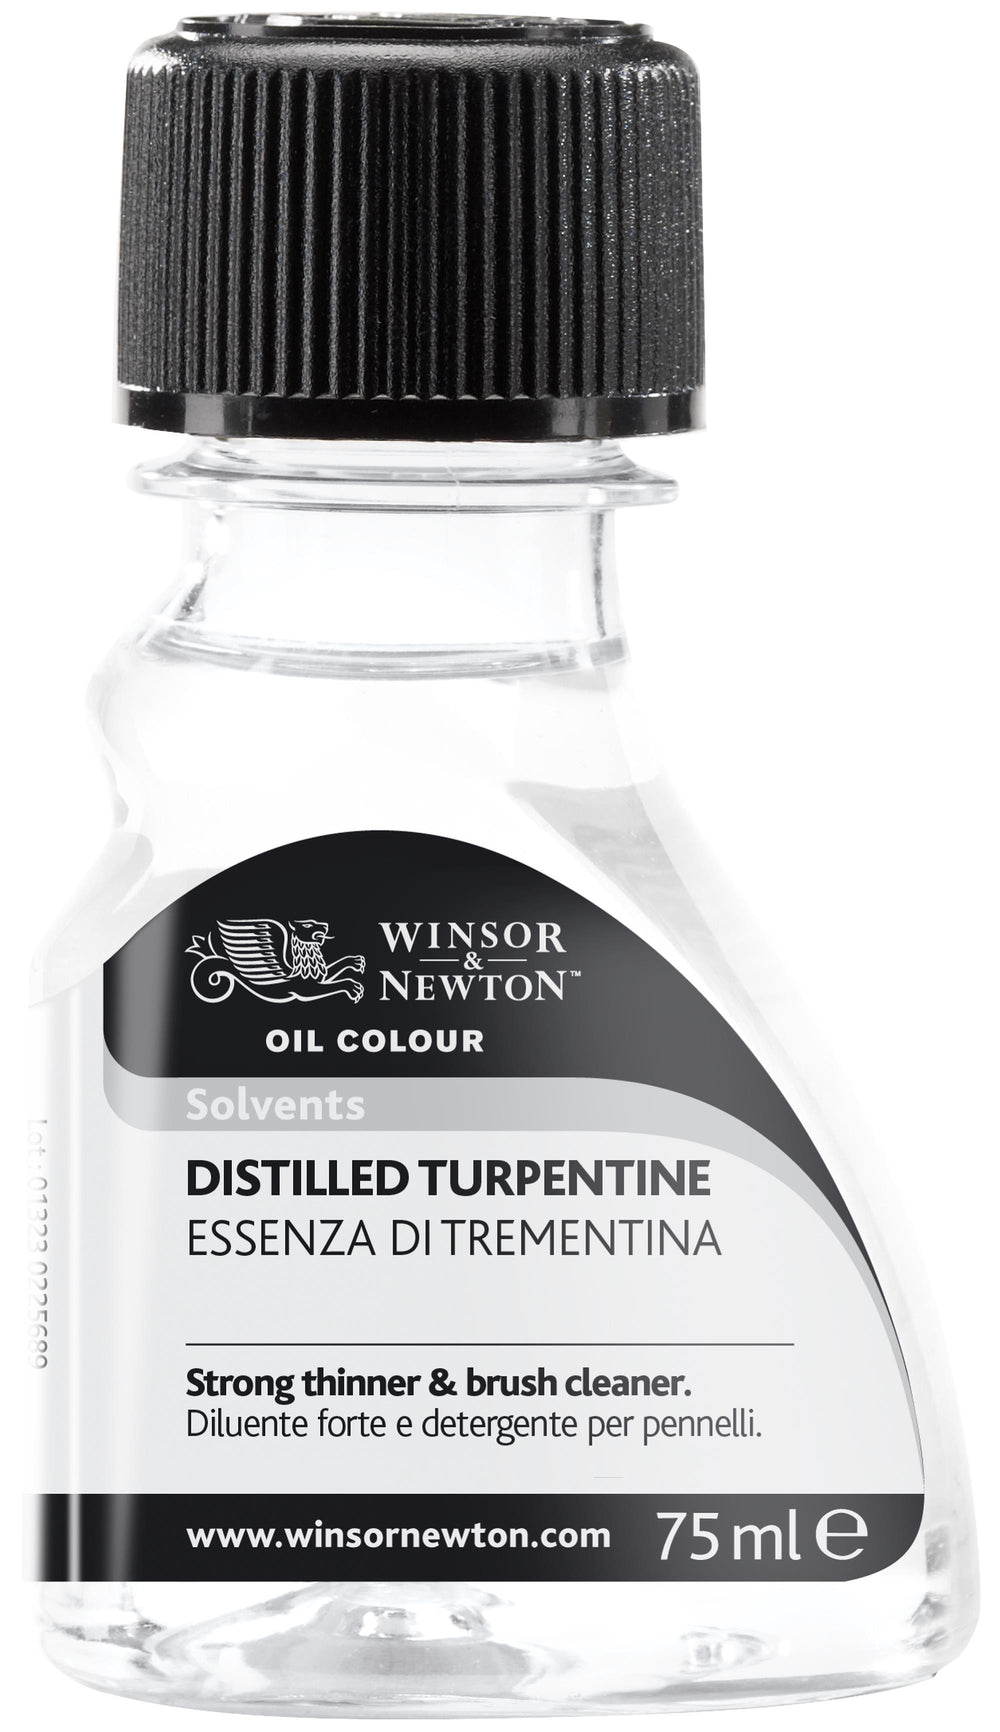 Winsor & Newton Oil Colour Distilled Turpentine - 75ml